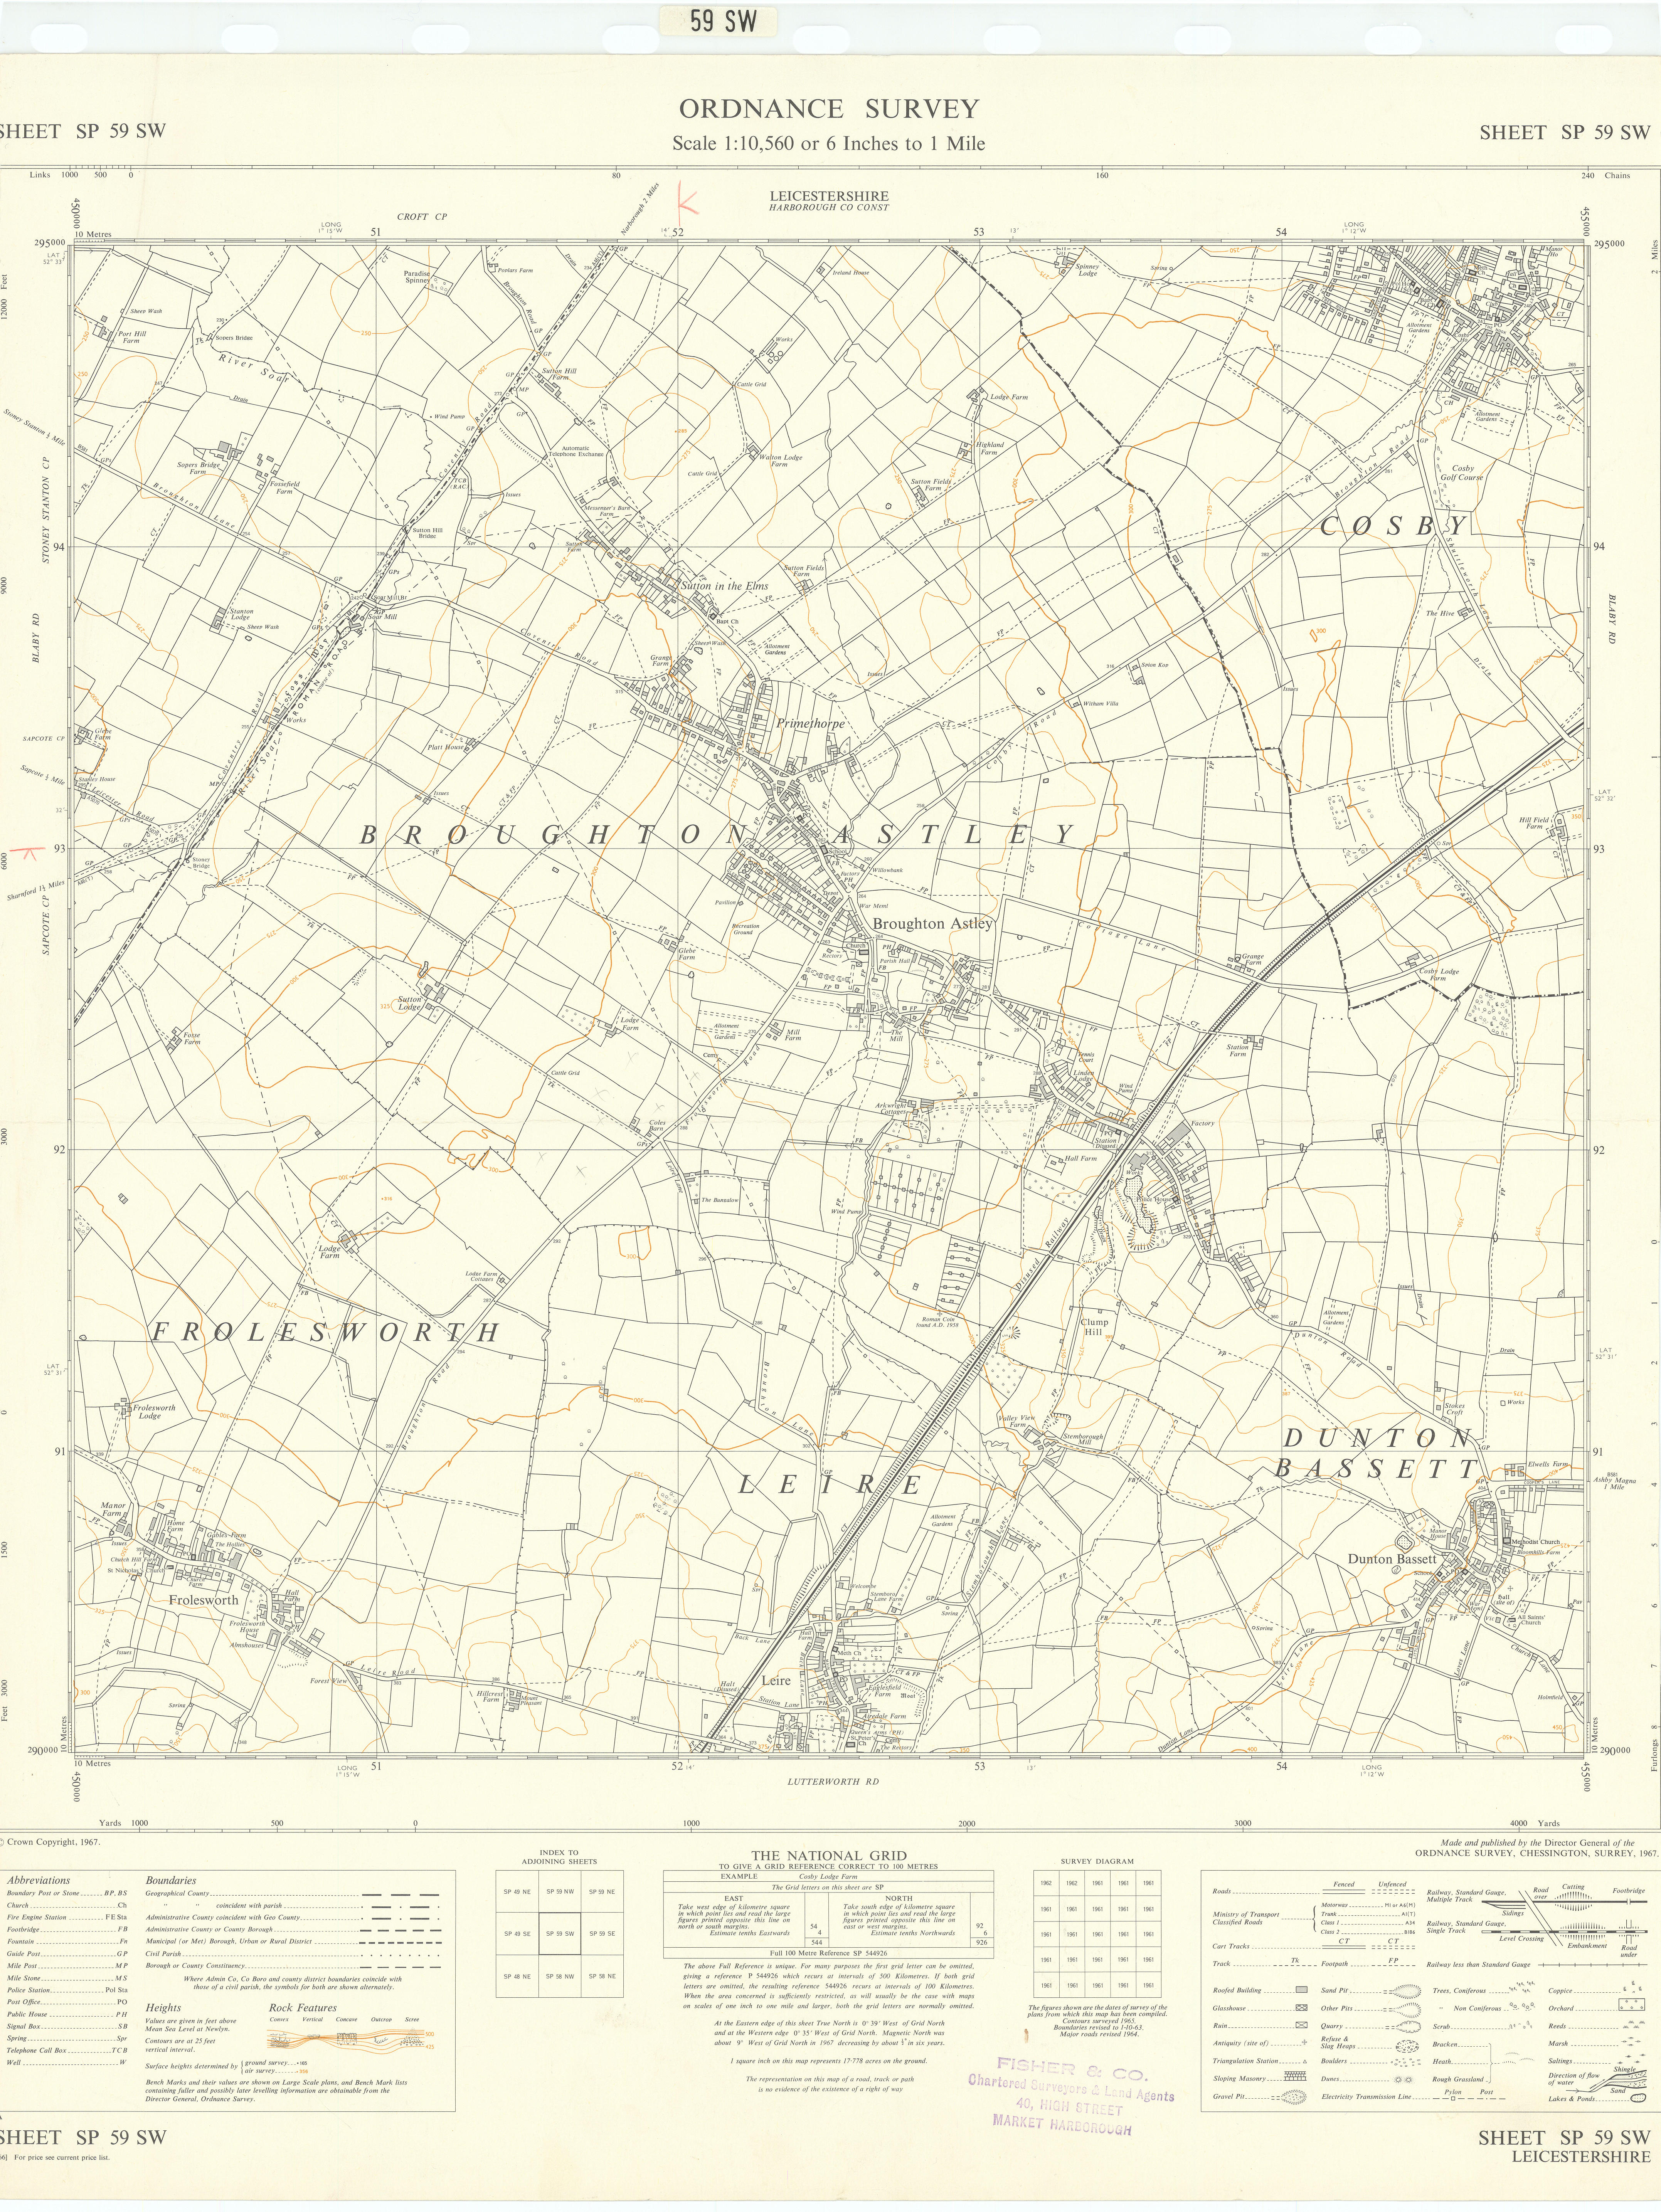 Ordnance Survey SP59SW Leics Broughton Astley Cosby Dunton Bassett 1967 map